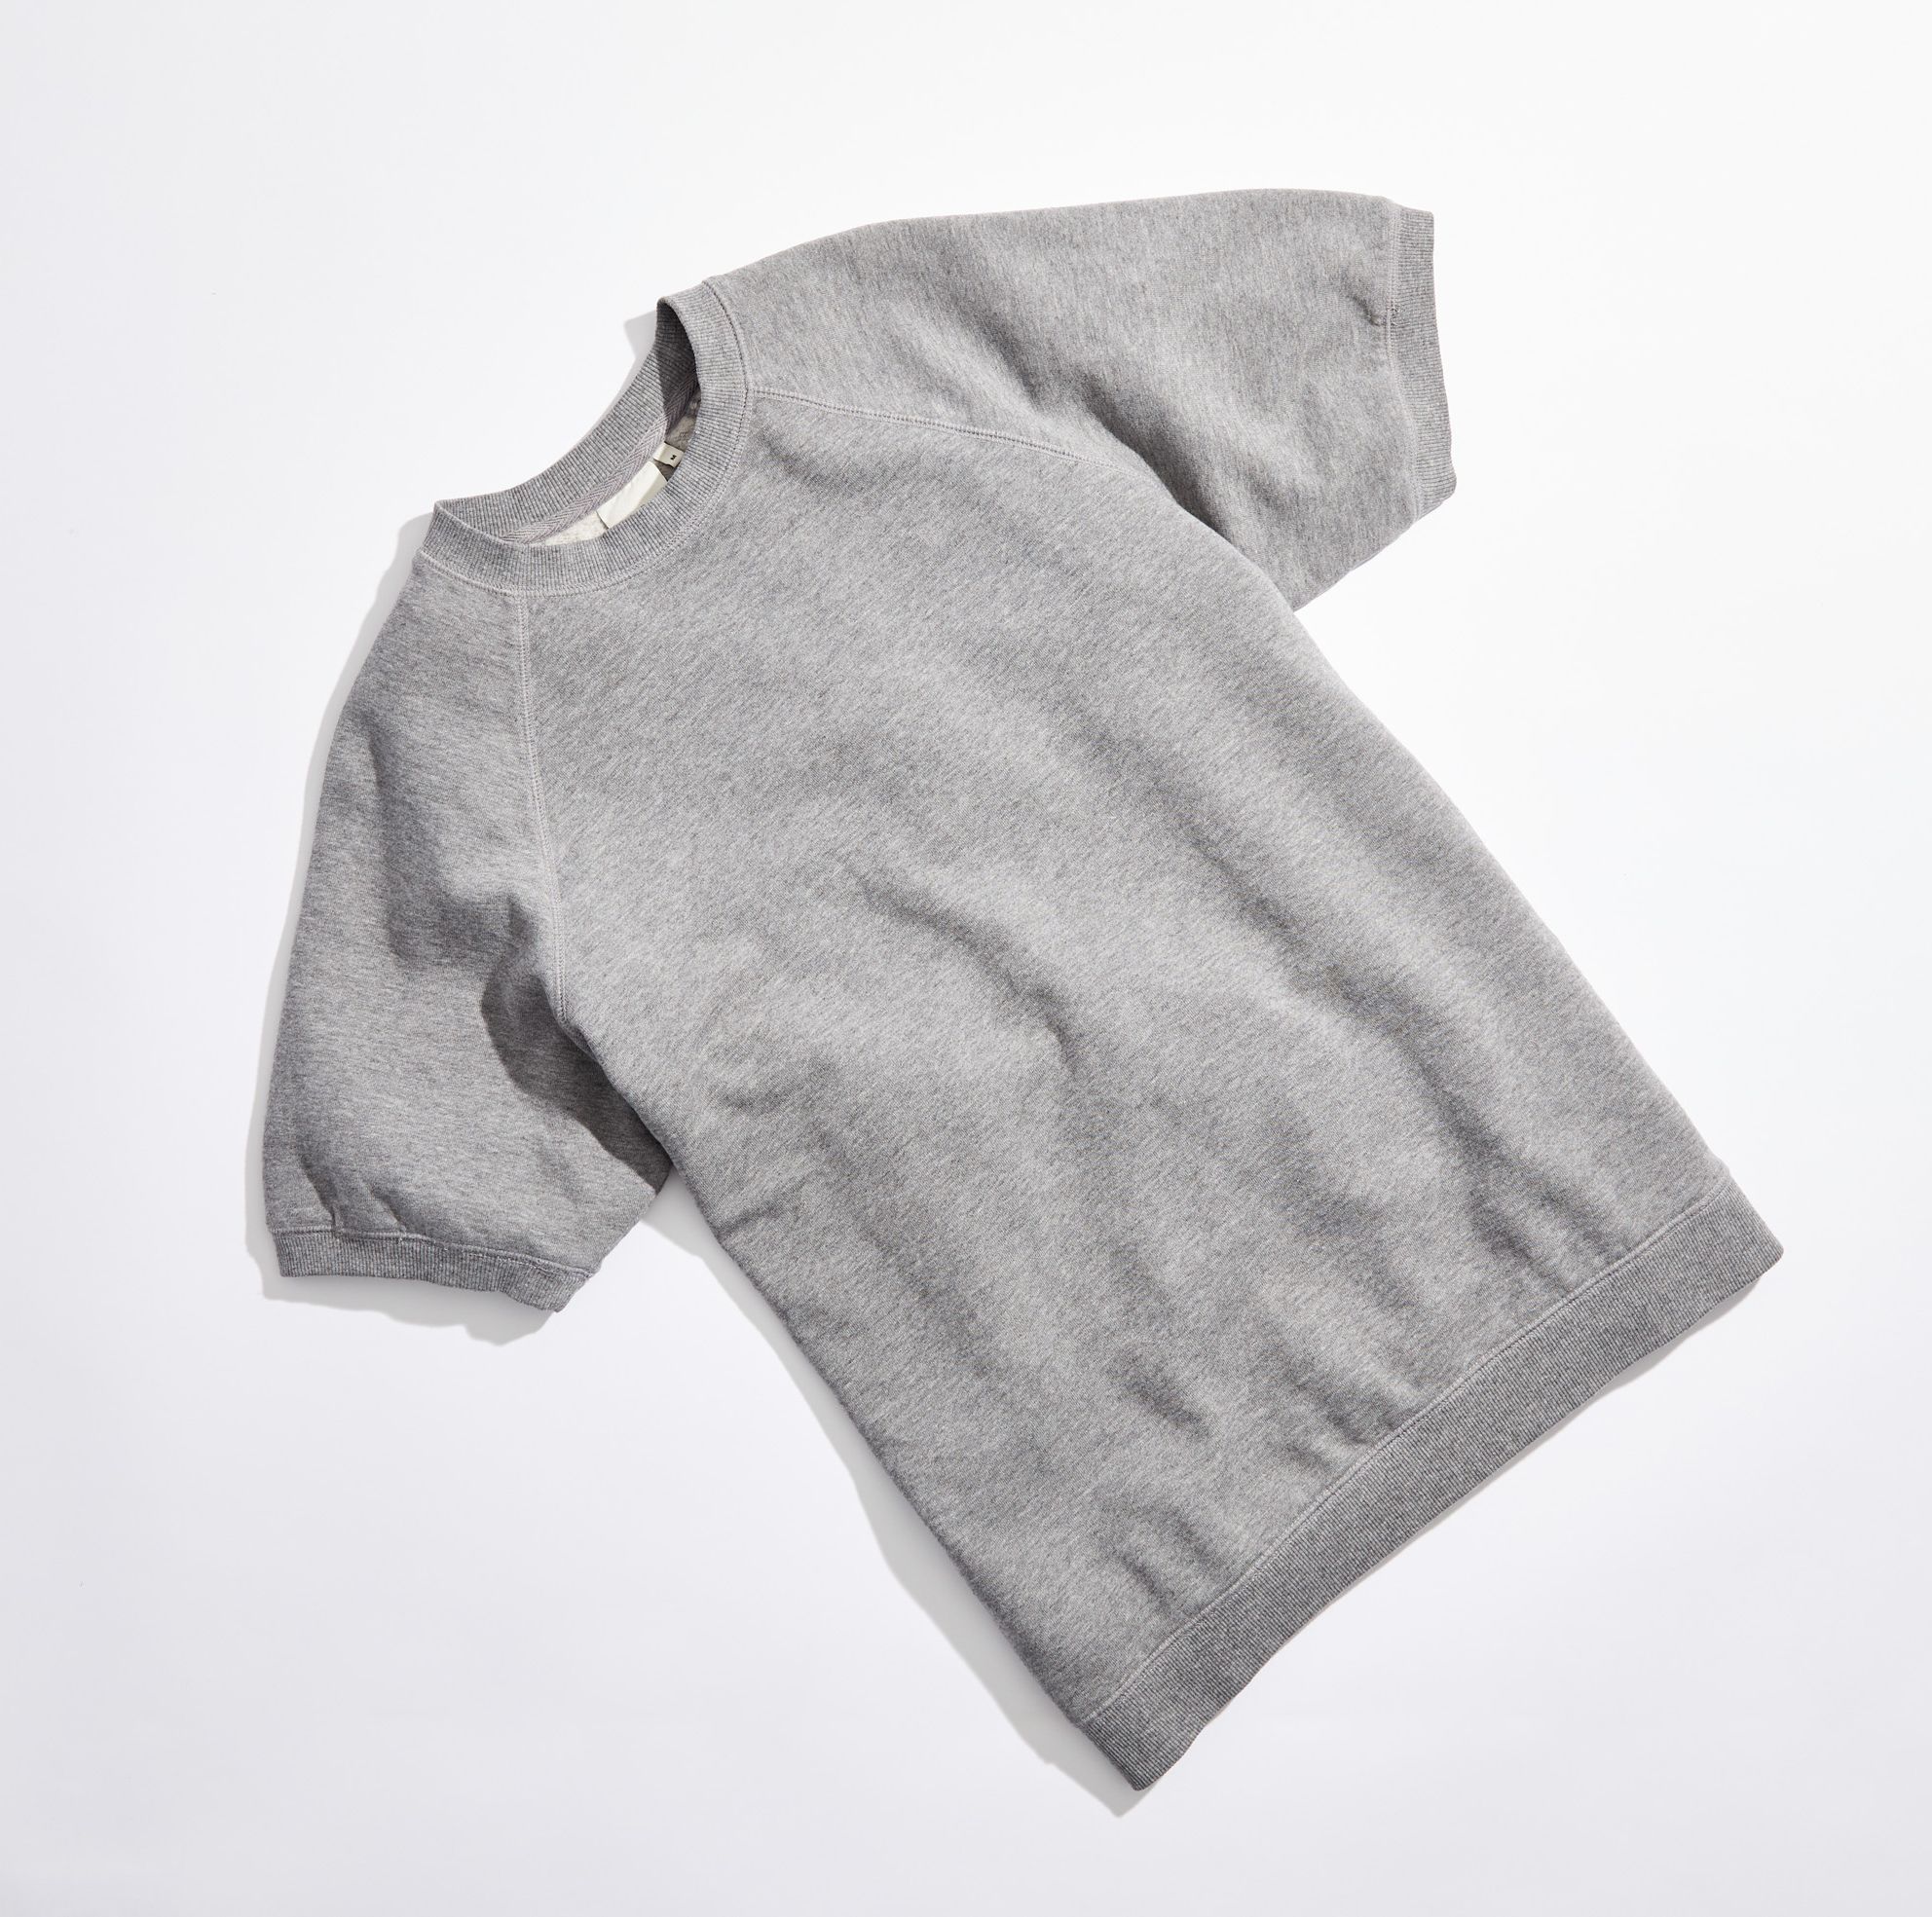 Richer Poorer's Short-Sleeve Sweatshirt Is the Weird-Weather Secret Weapon You've Been Waiting For